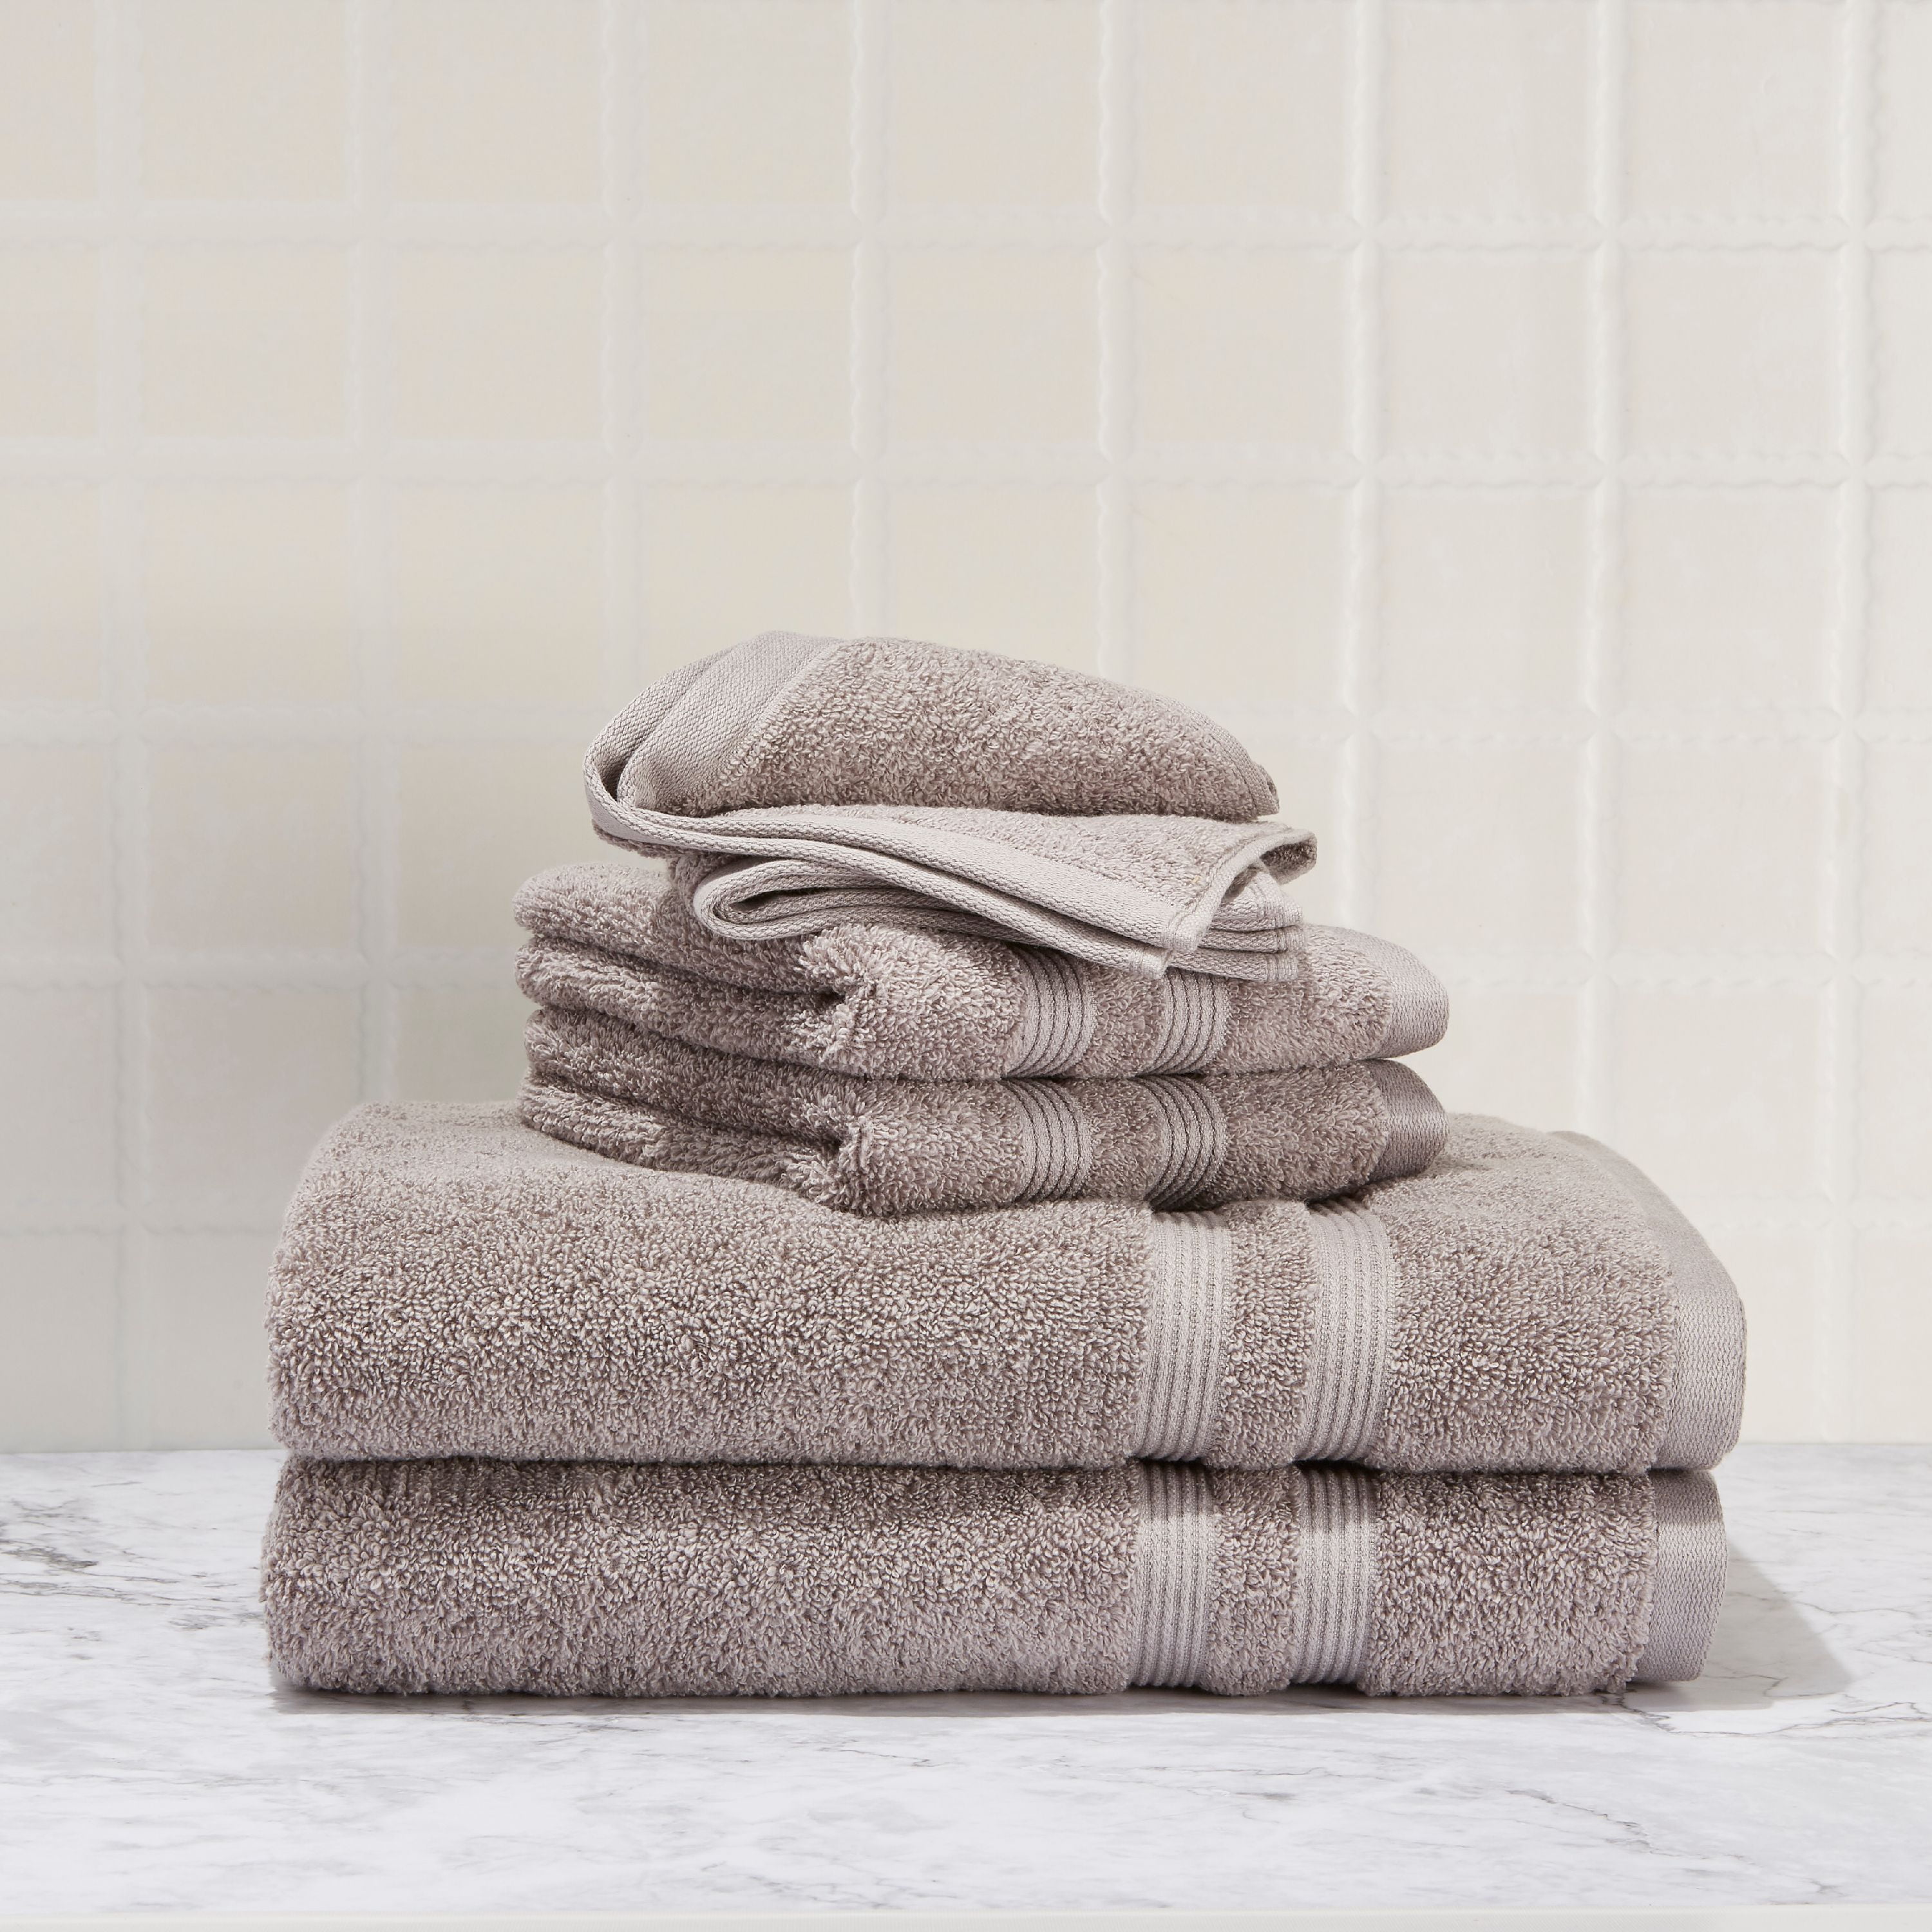 Mainstays Performance Solid 6-Piece Bath Towel Set, Grey